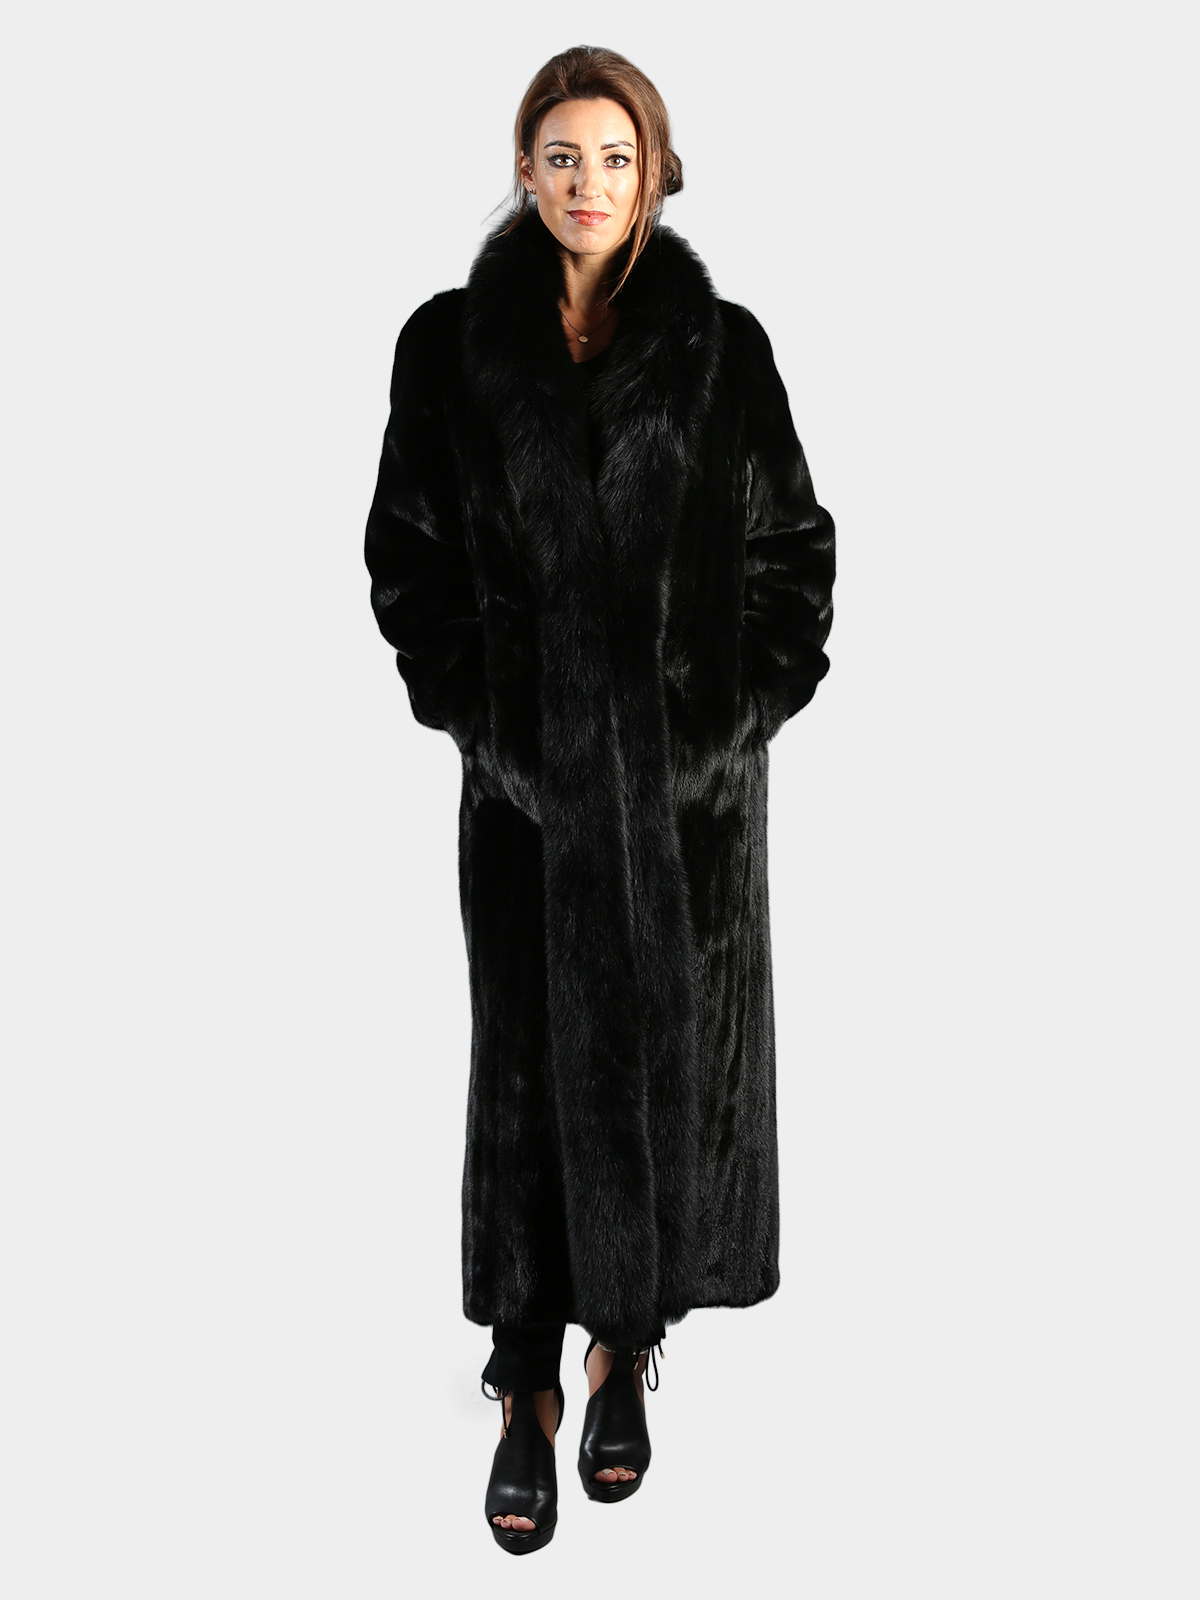 Day Furs, Inc. Man's Mink Fur Jacket